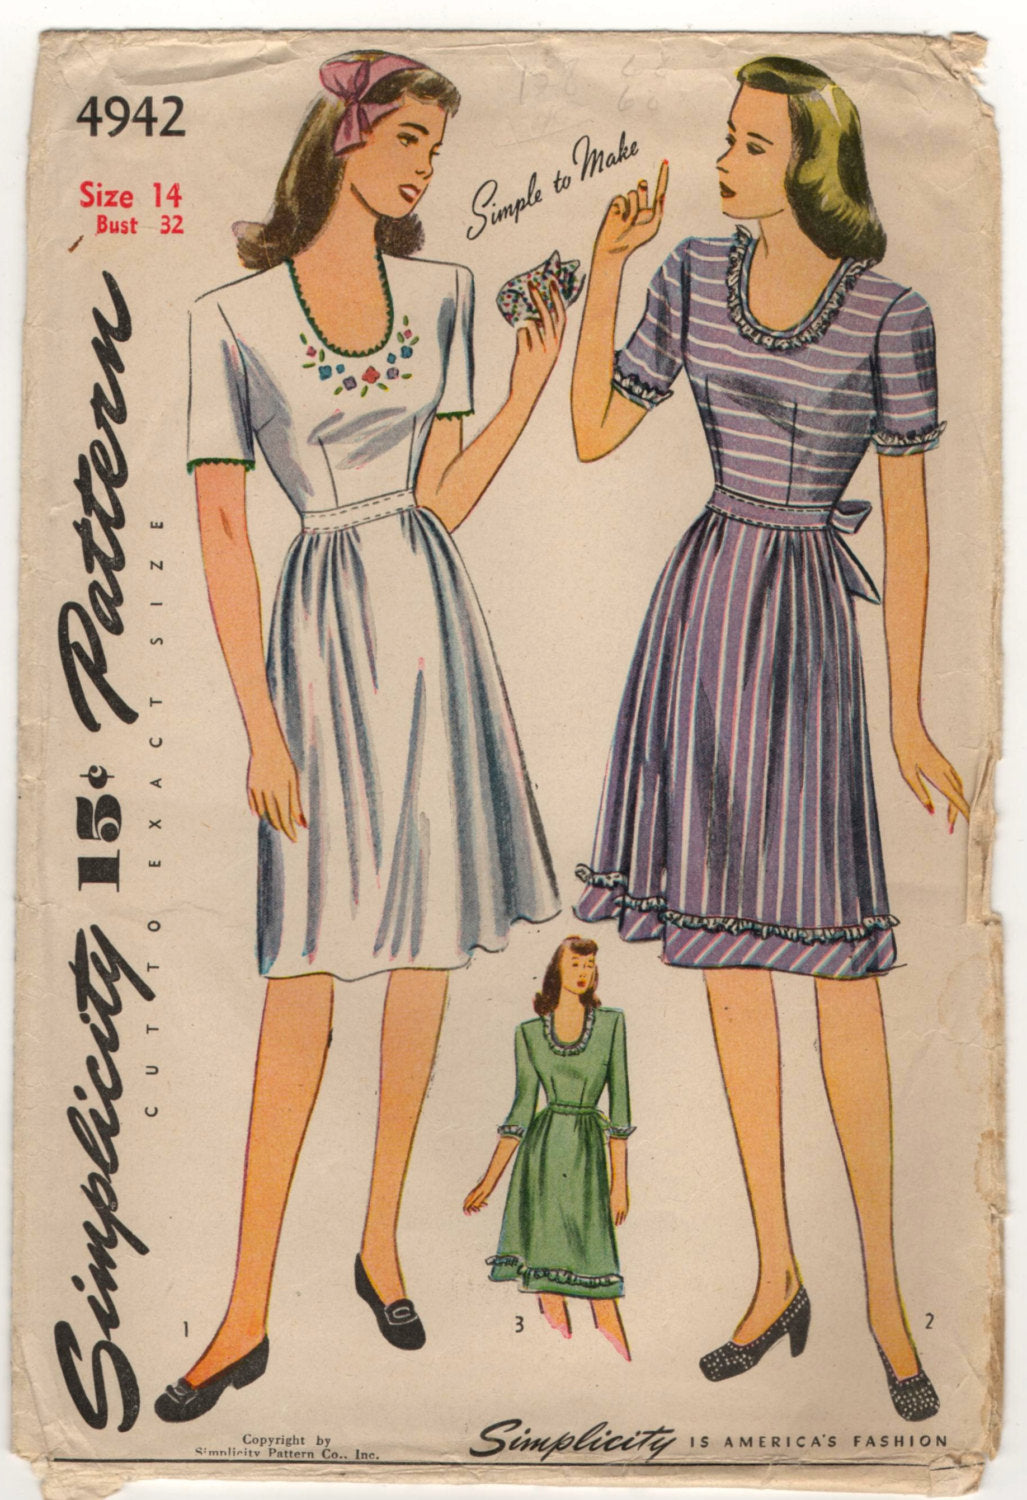 1940's Simplicity One-Piece Dress with oval nackline- Bust 32